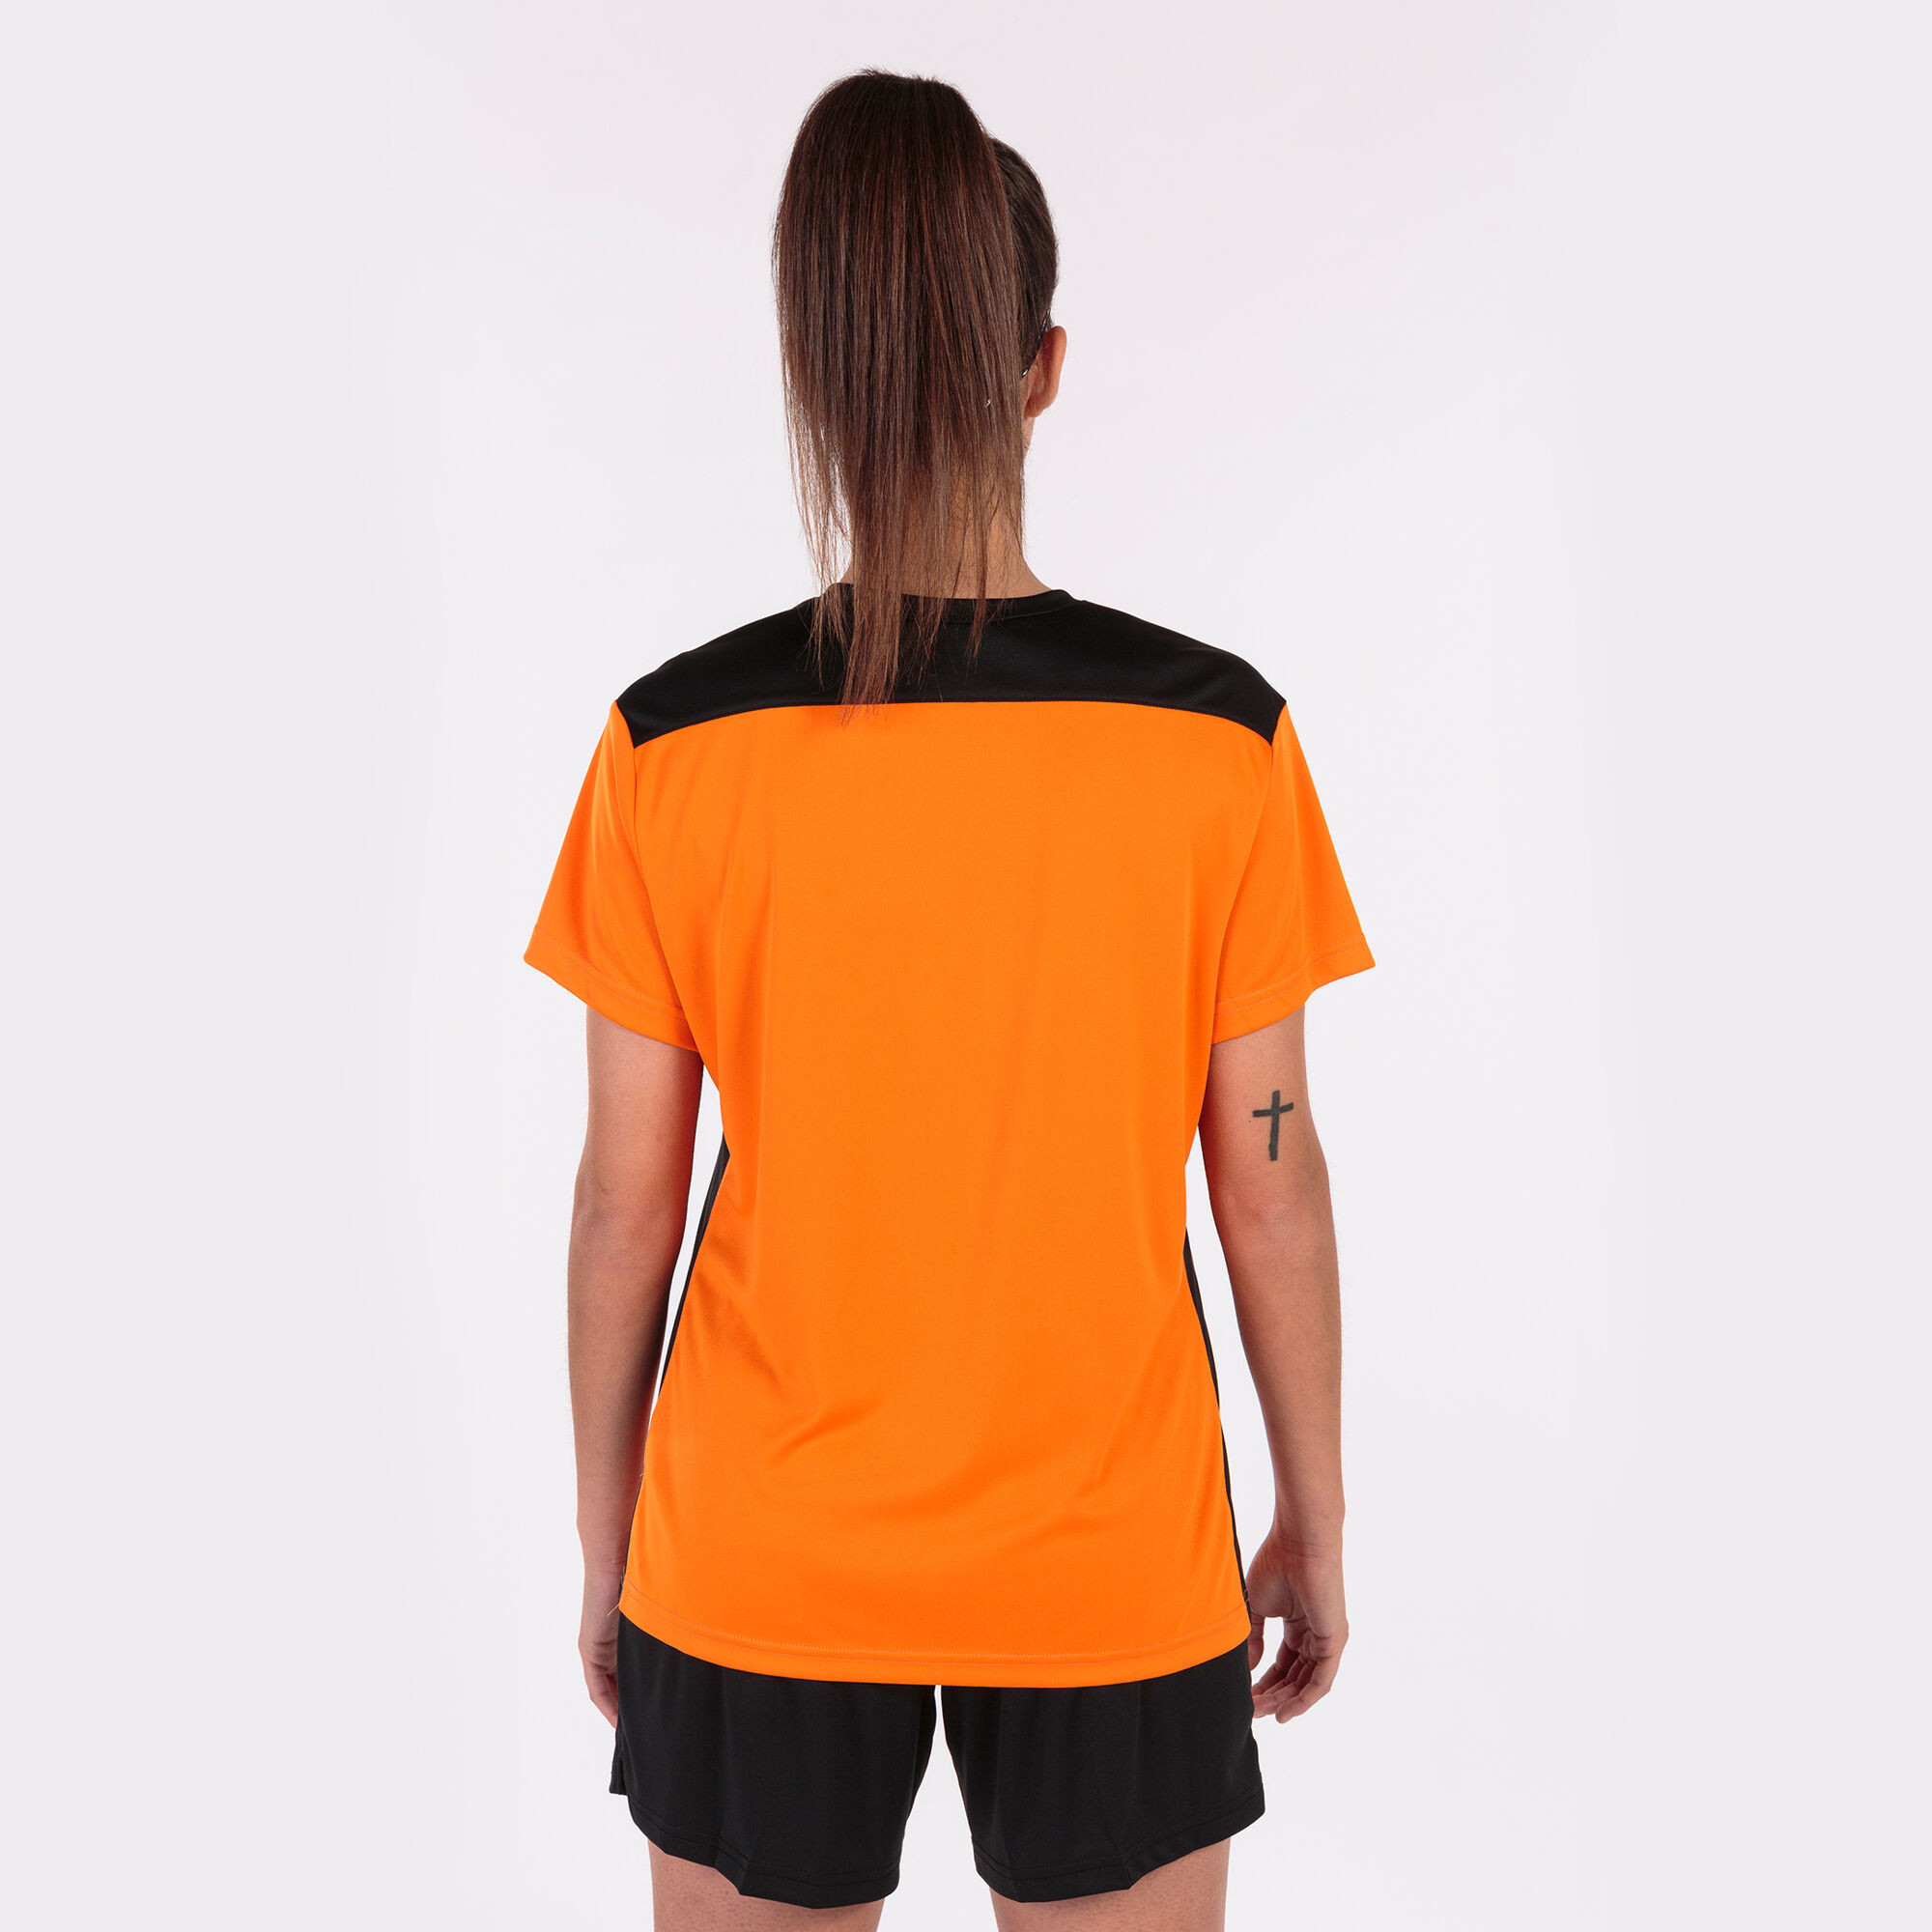 Camiseta manga corta mujer Championship VI naranja negro